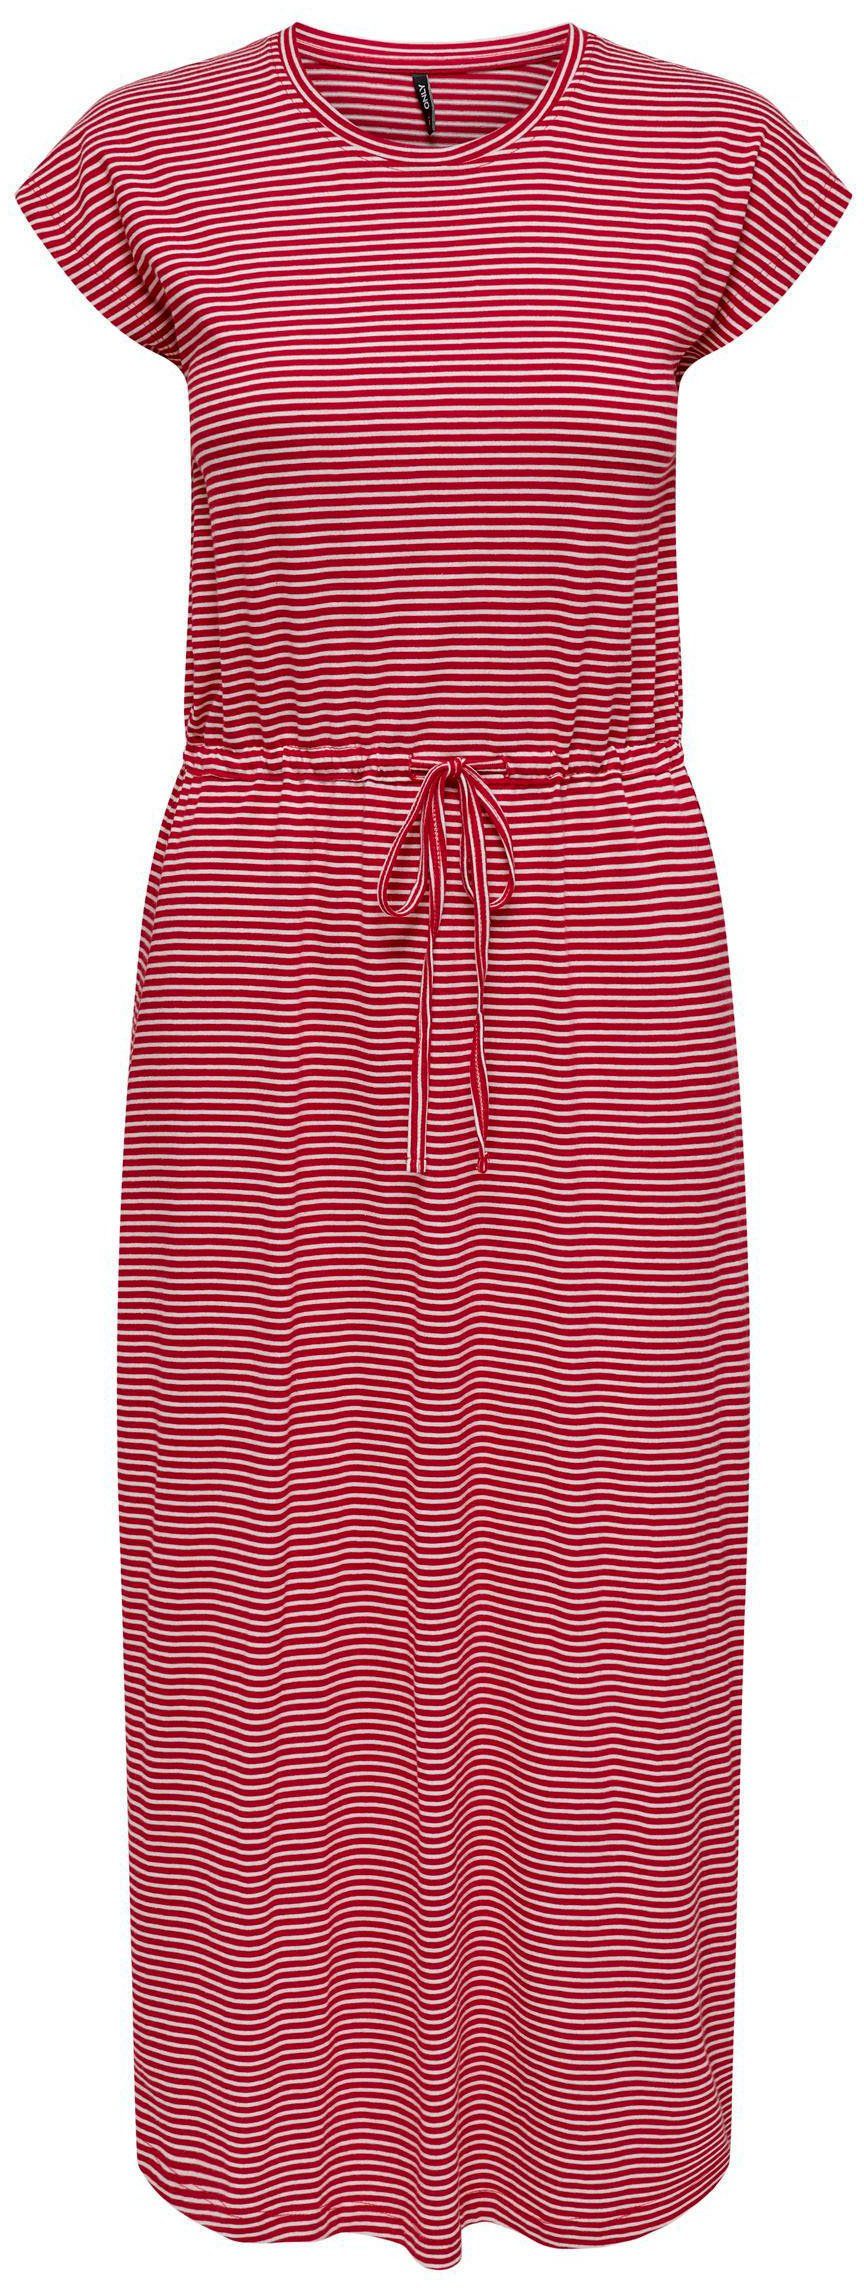 ONLY Jerseykleid ONLMAY S/S MIDI STRIPE DRESS In Streifen Optik High Risk Red Stripes | Sommerkleider